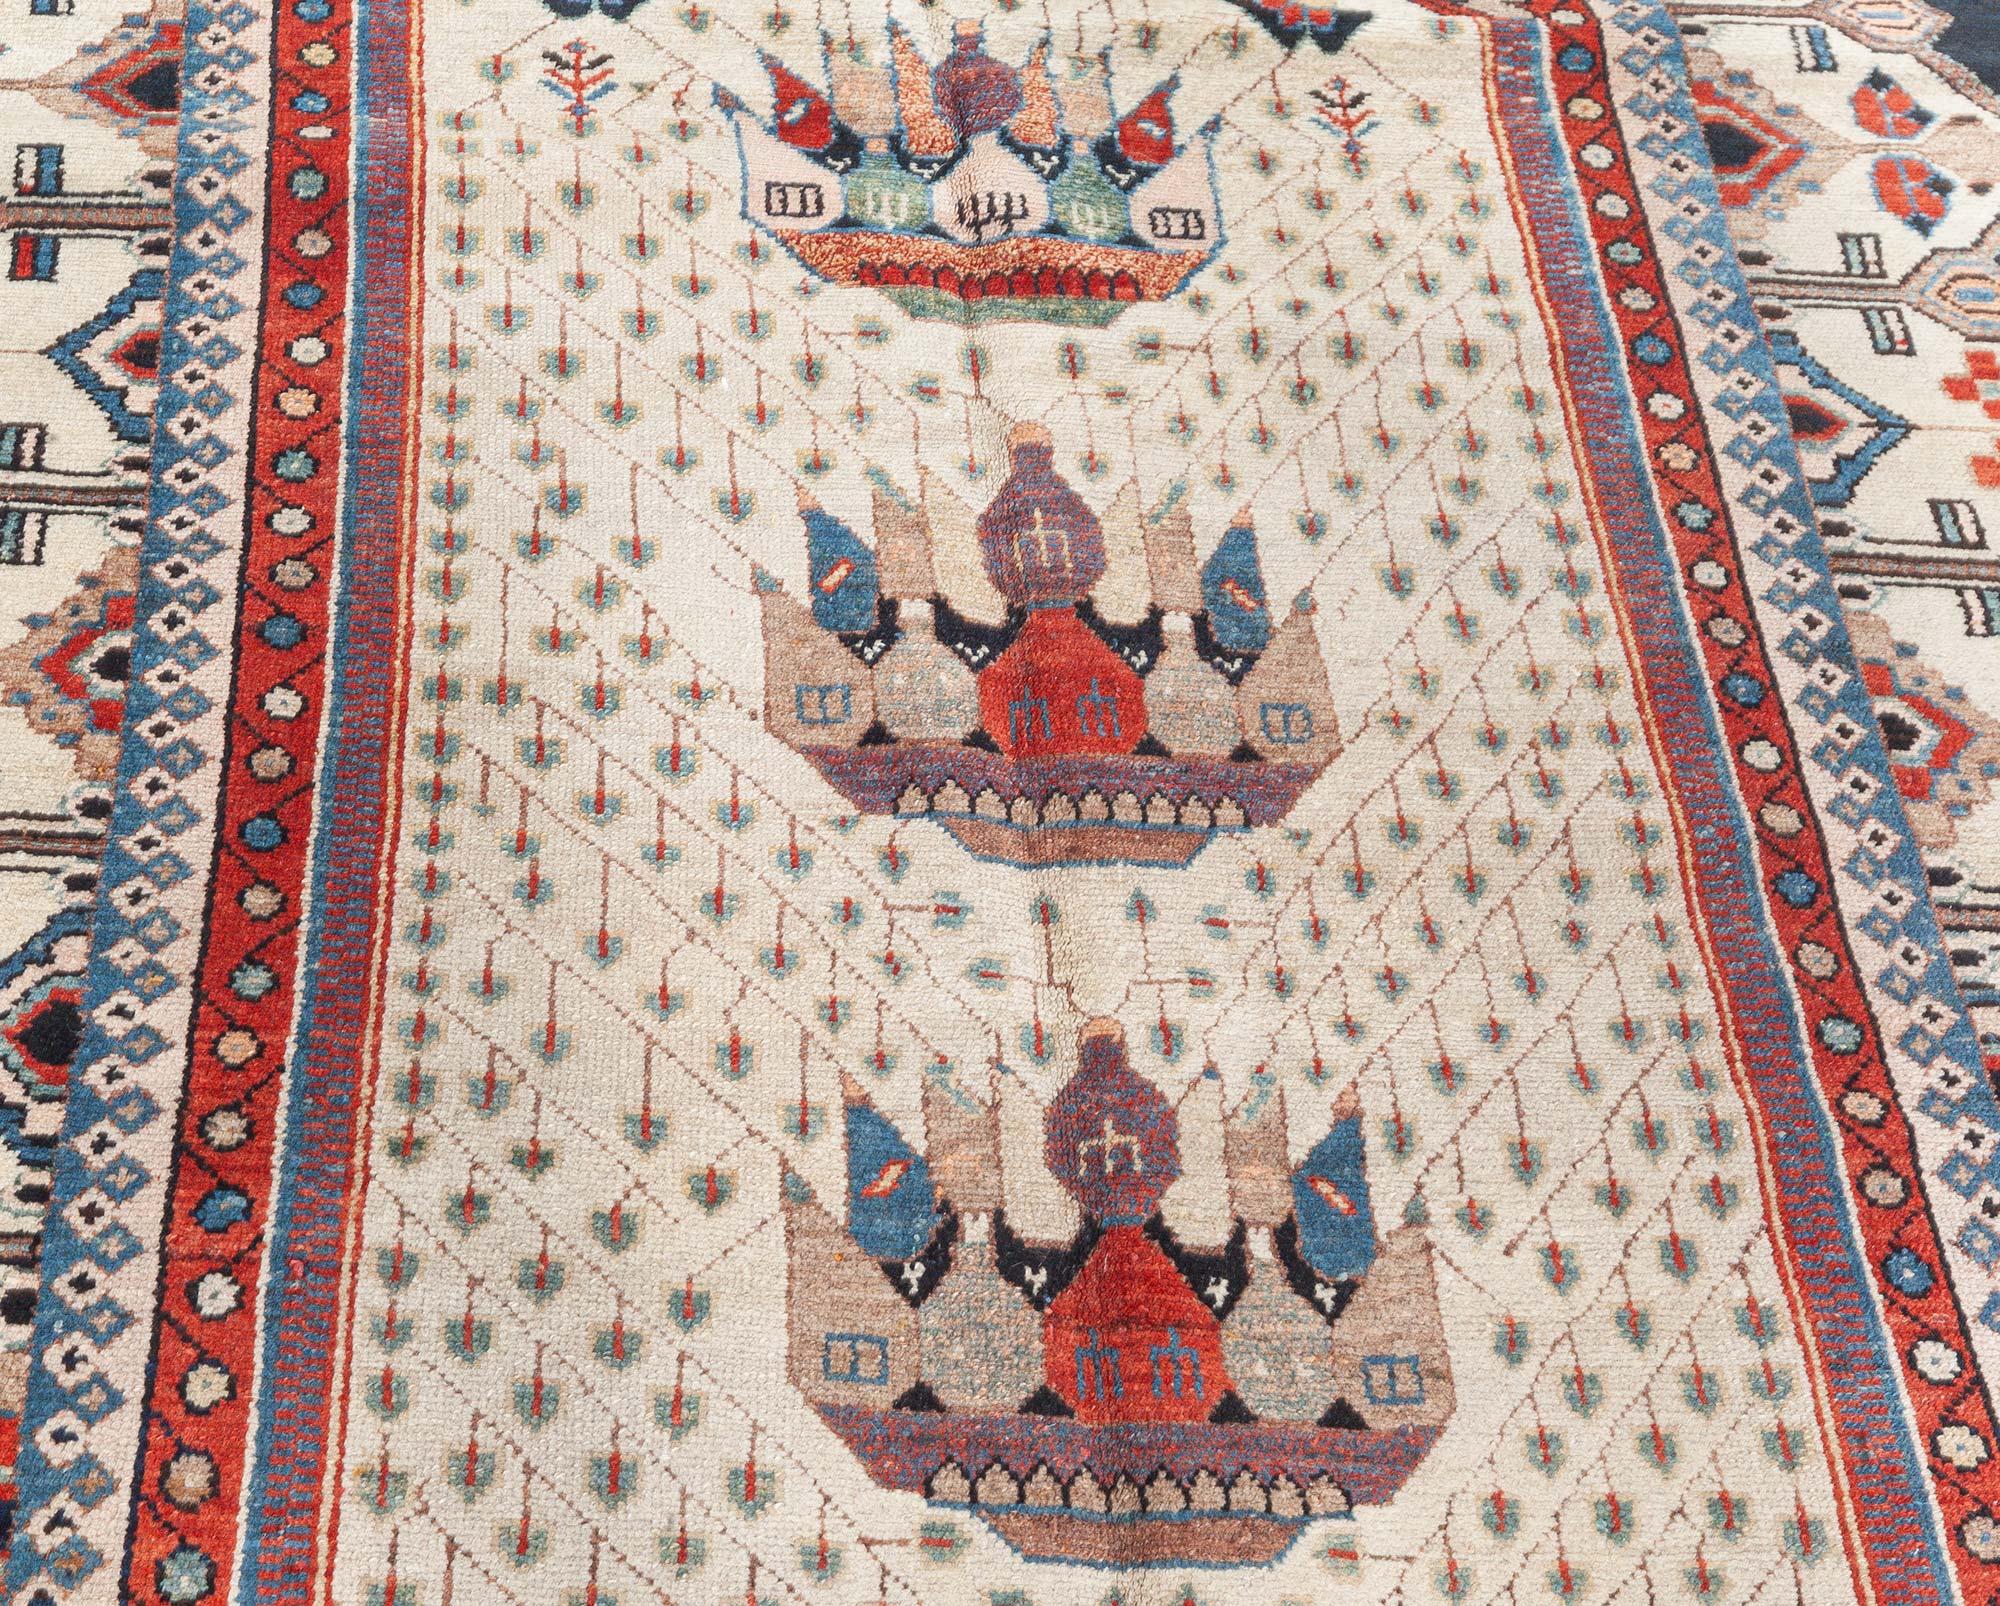 Early 20th century Persian Malayer handmade wool rug
Size: 4'4